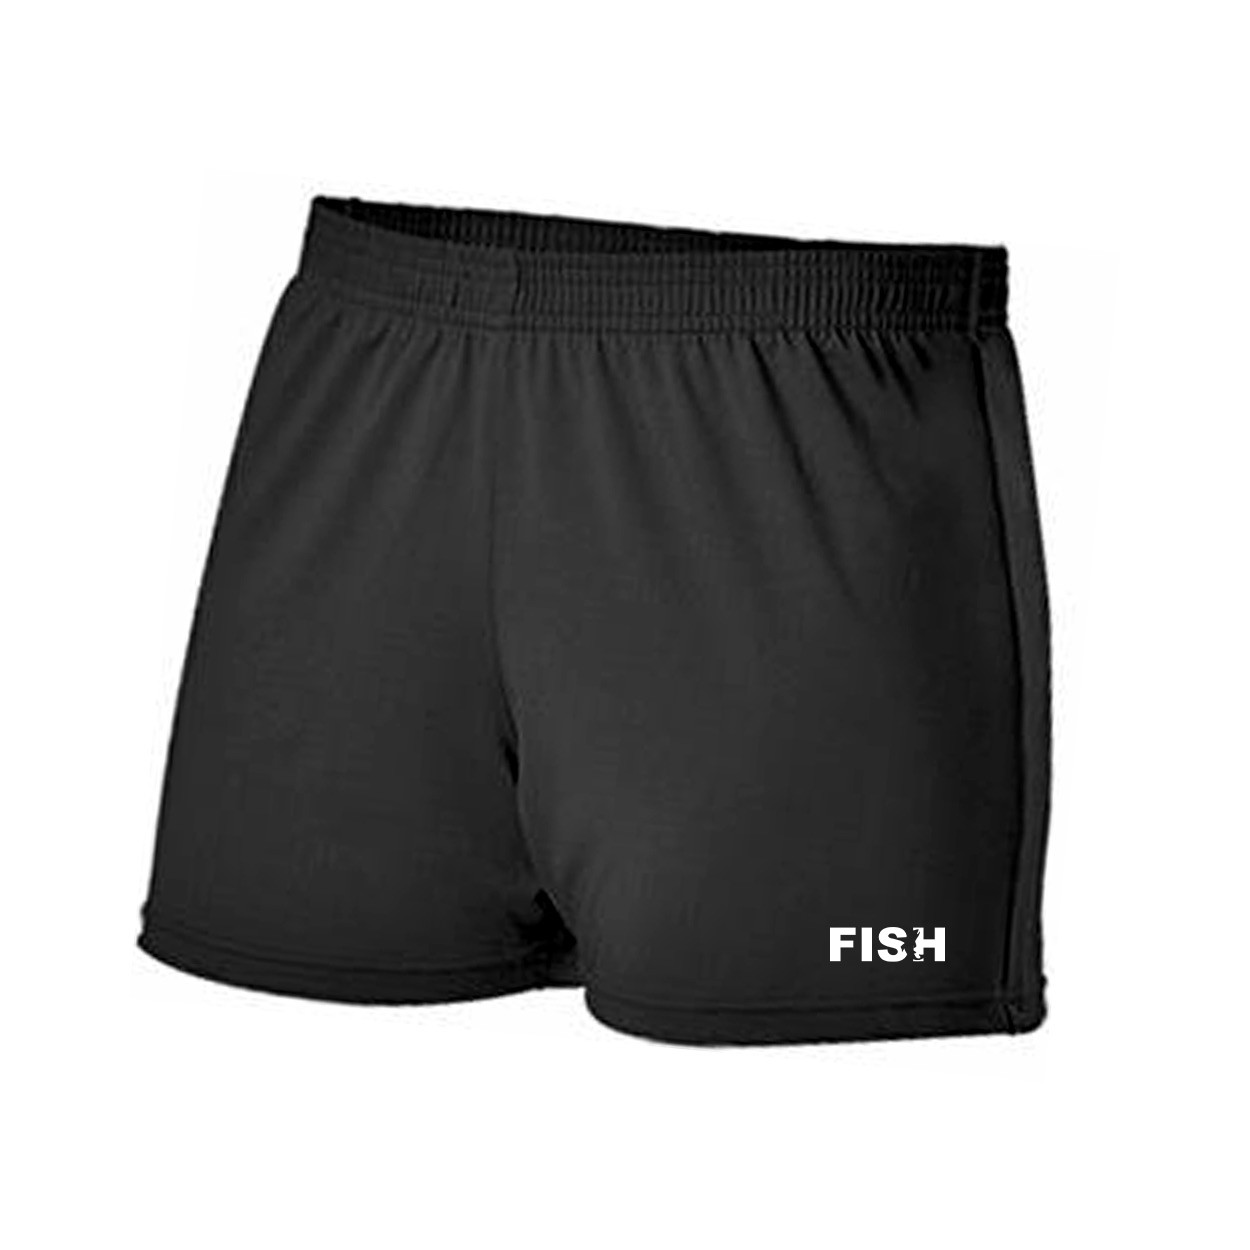 Fish Catch Logo Classic Women's Cheer Shorts Black (White Logo)